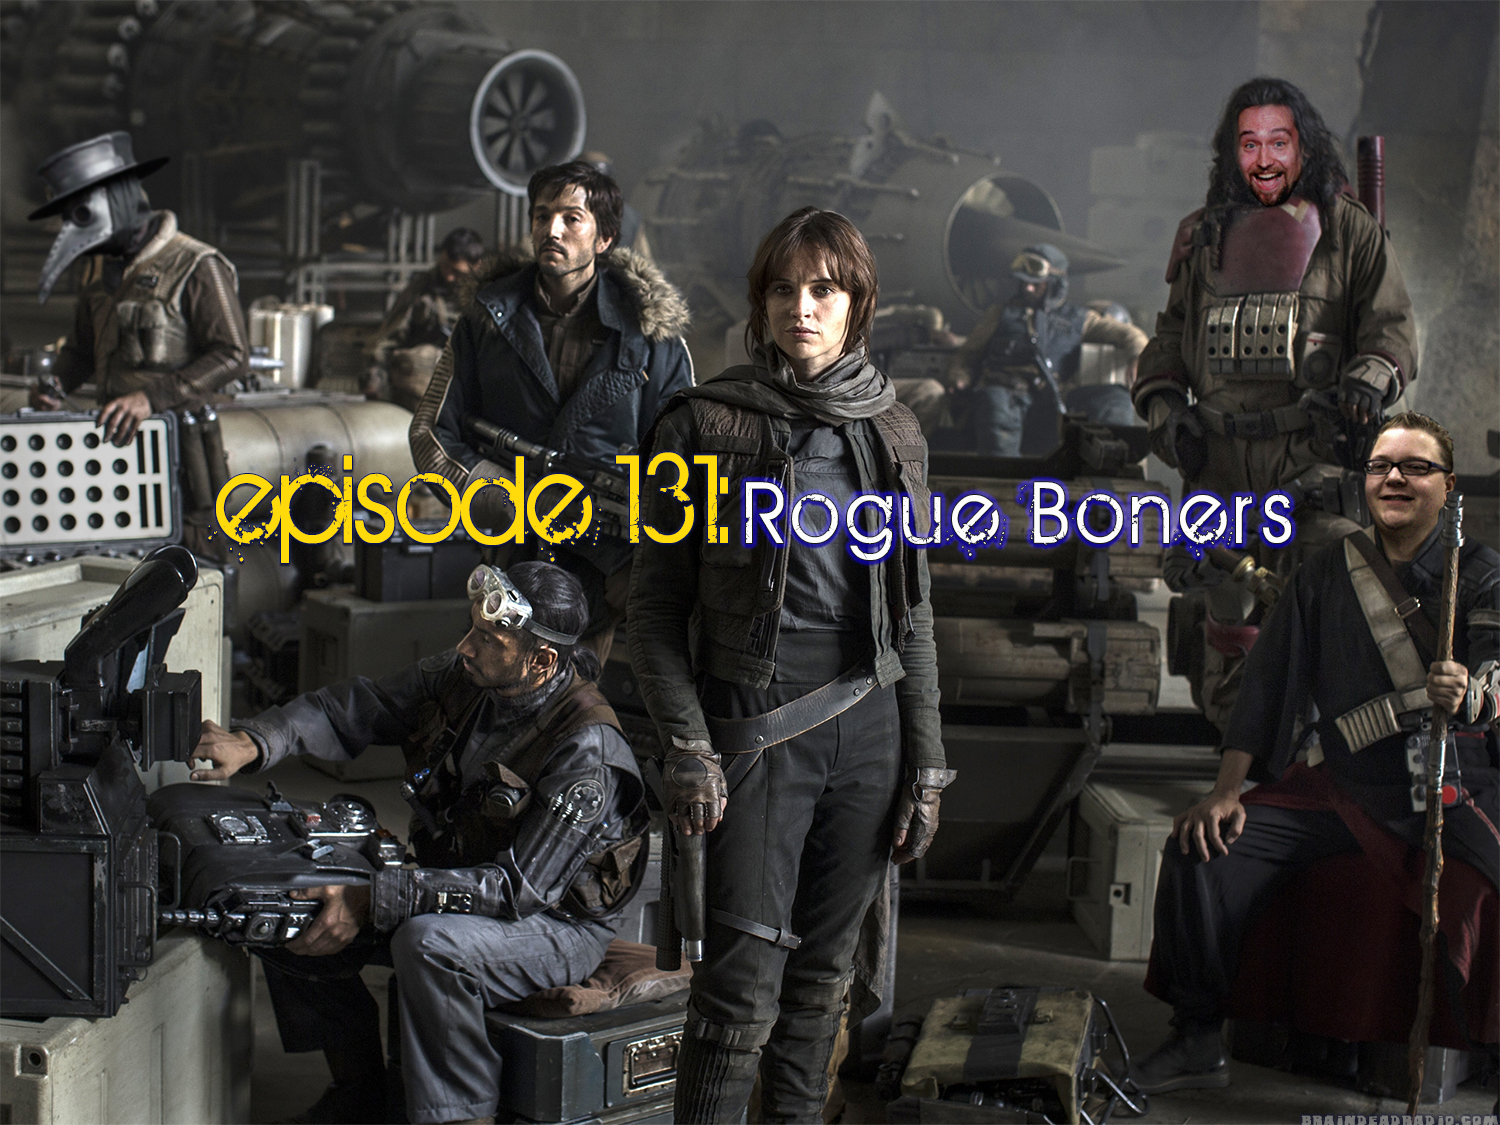 Brain Dead Radio Episode 131: Rogue Boners